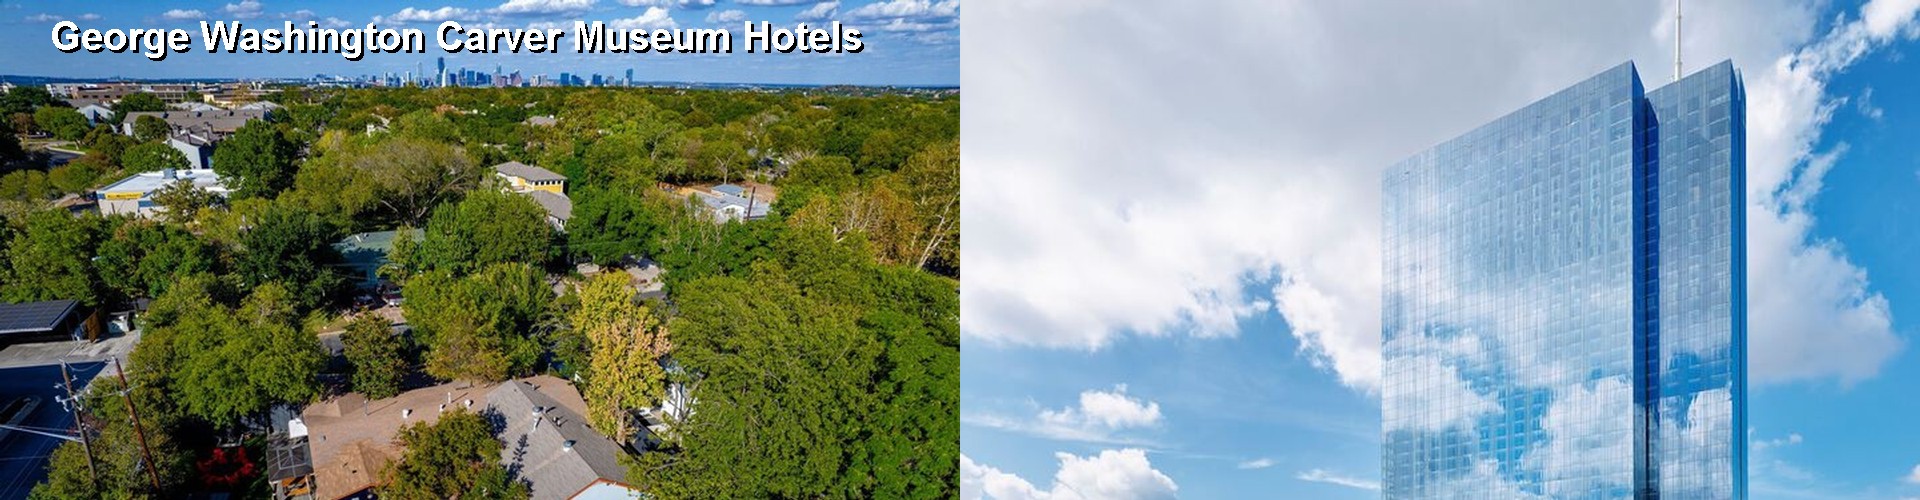 5 Best Hotels near George Washington Carver Museum